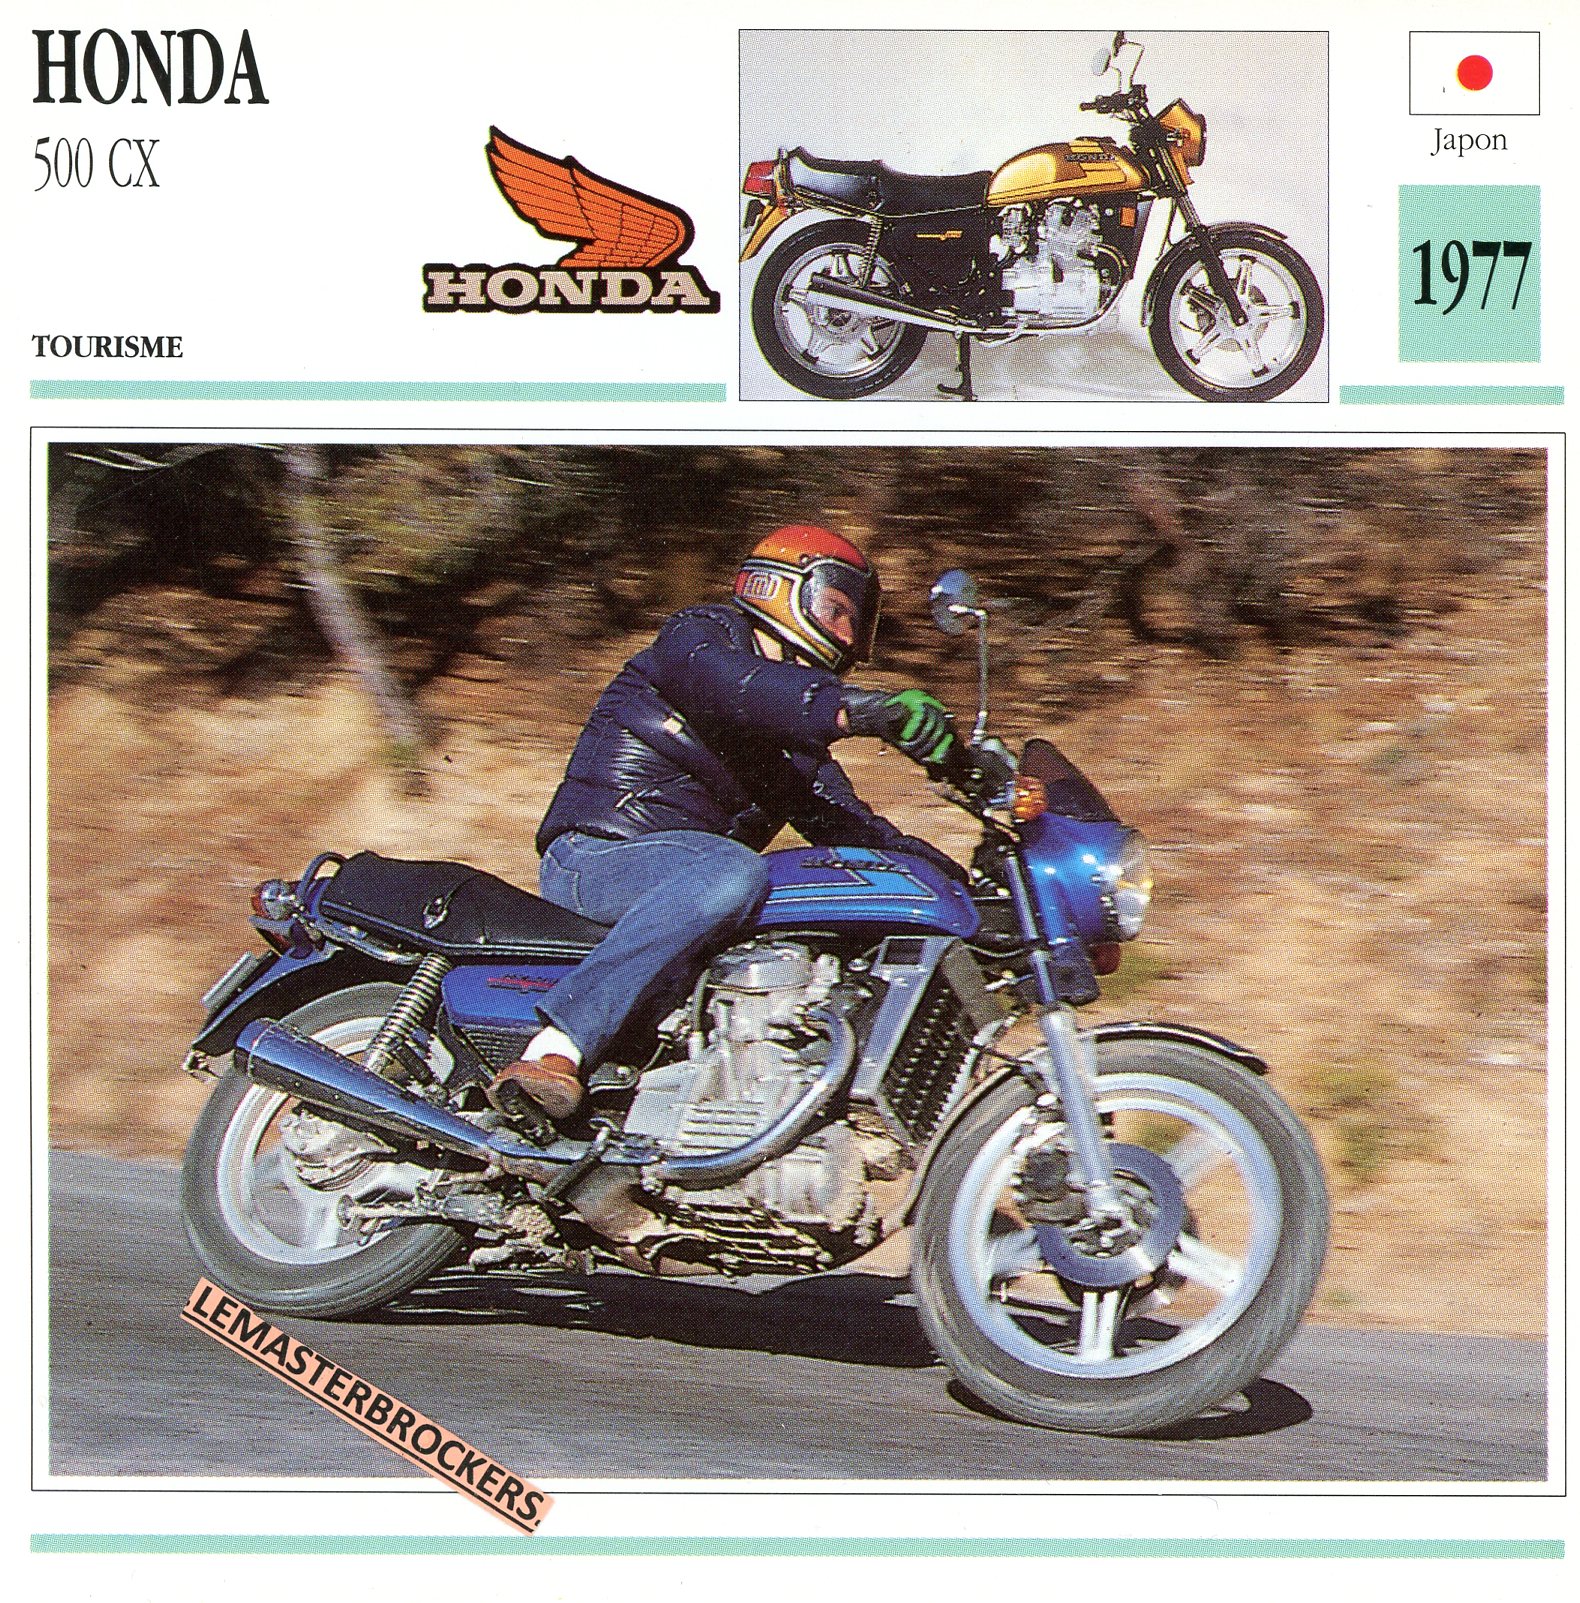 FICHE-MOTO-HONDA-500-CX500-1977-LEMASTERBROCKERS-CARS-MOTORCYCLE